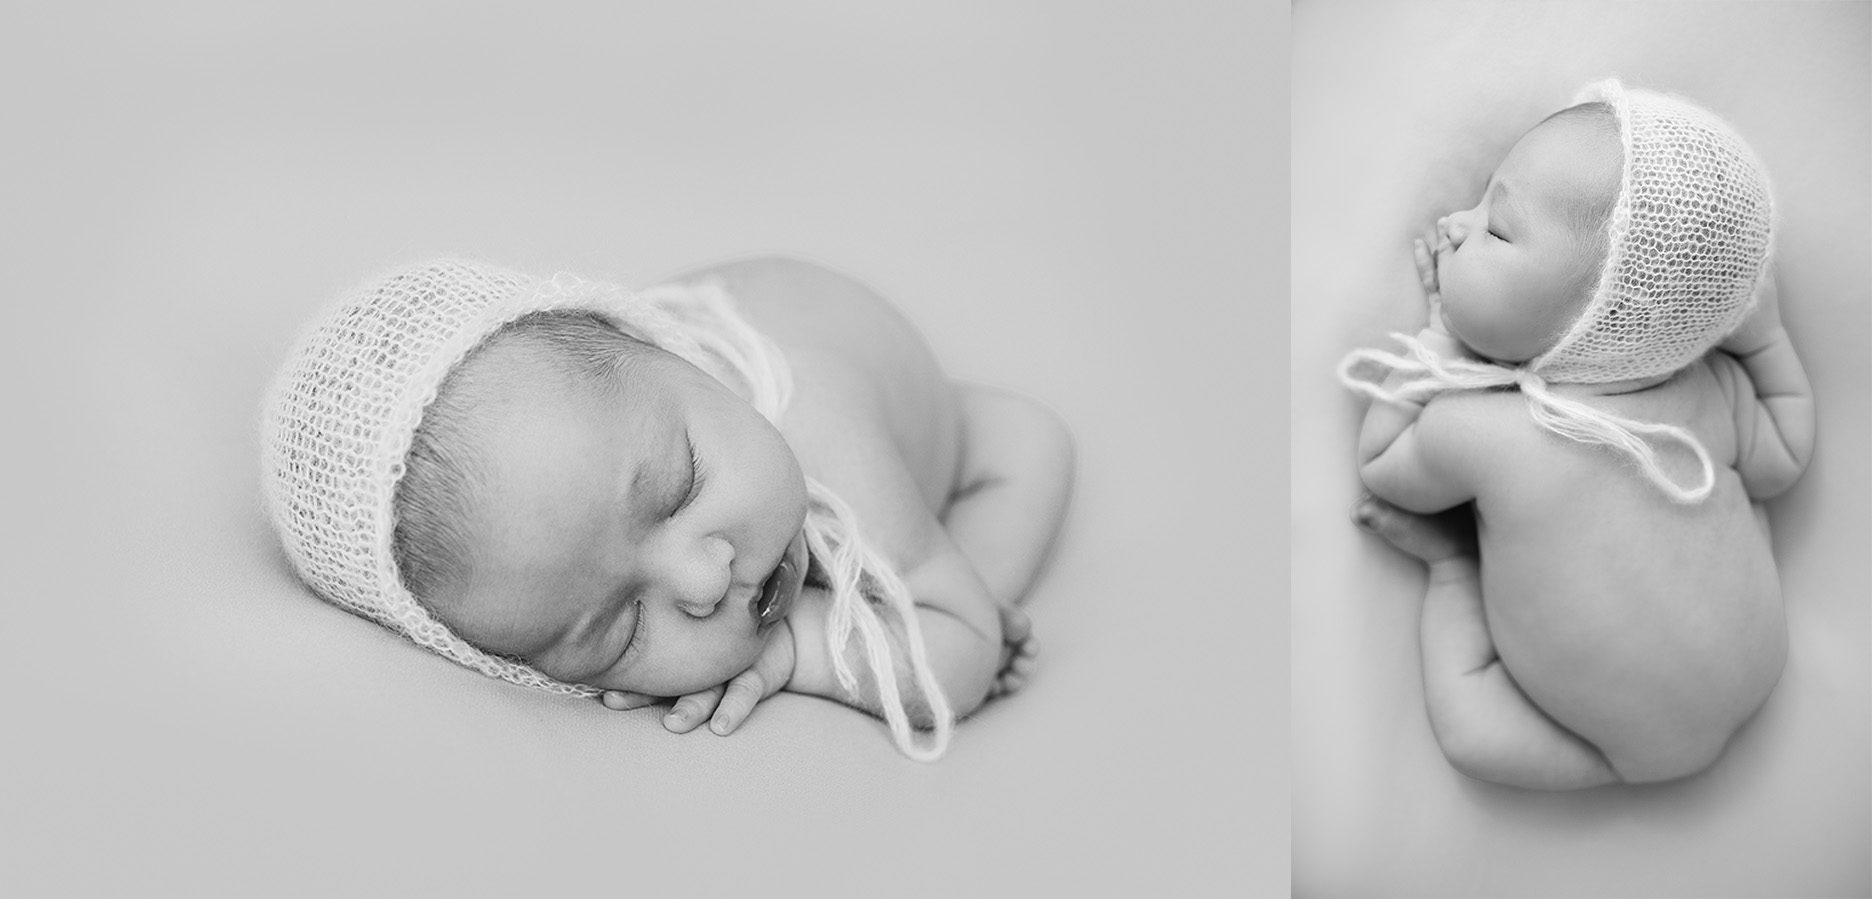 Edmonton newborn photographer - newborn posed on purple in black and white